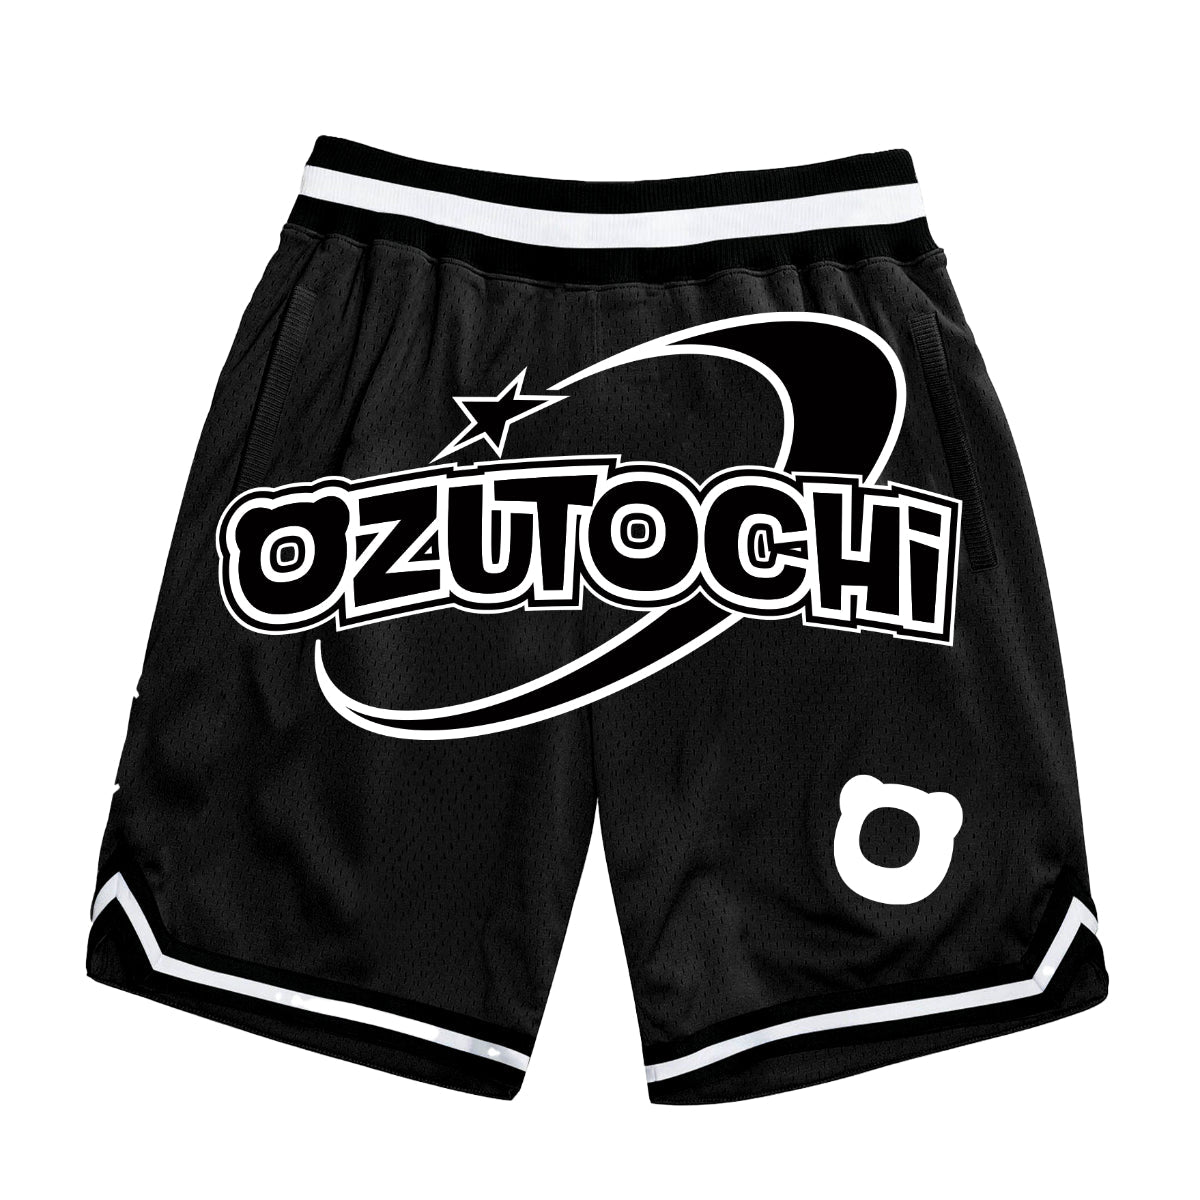 OZUTOCHI Black Mesh Shorts